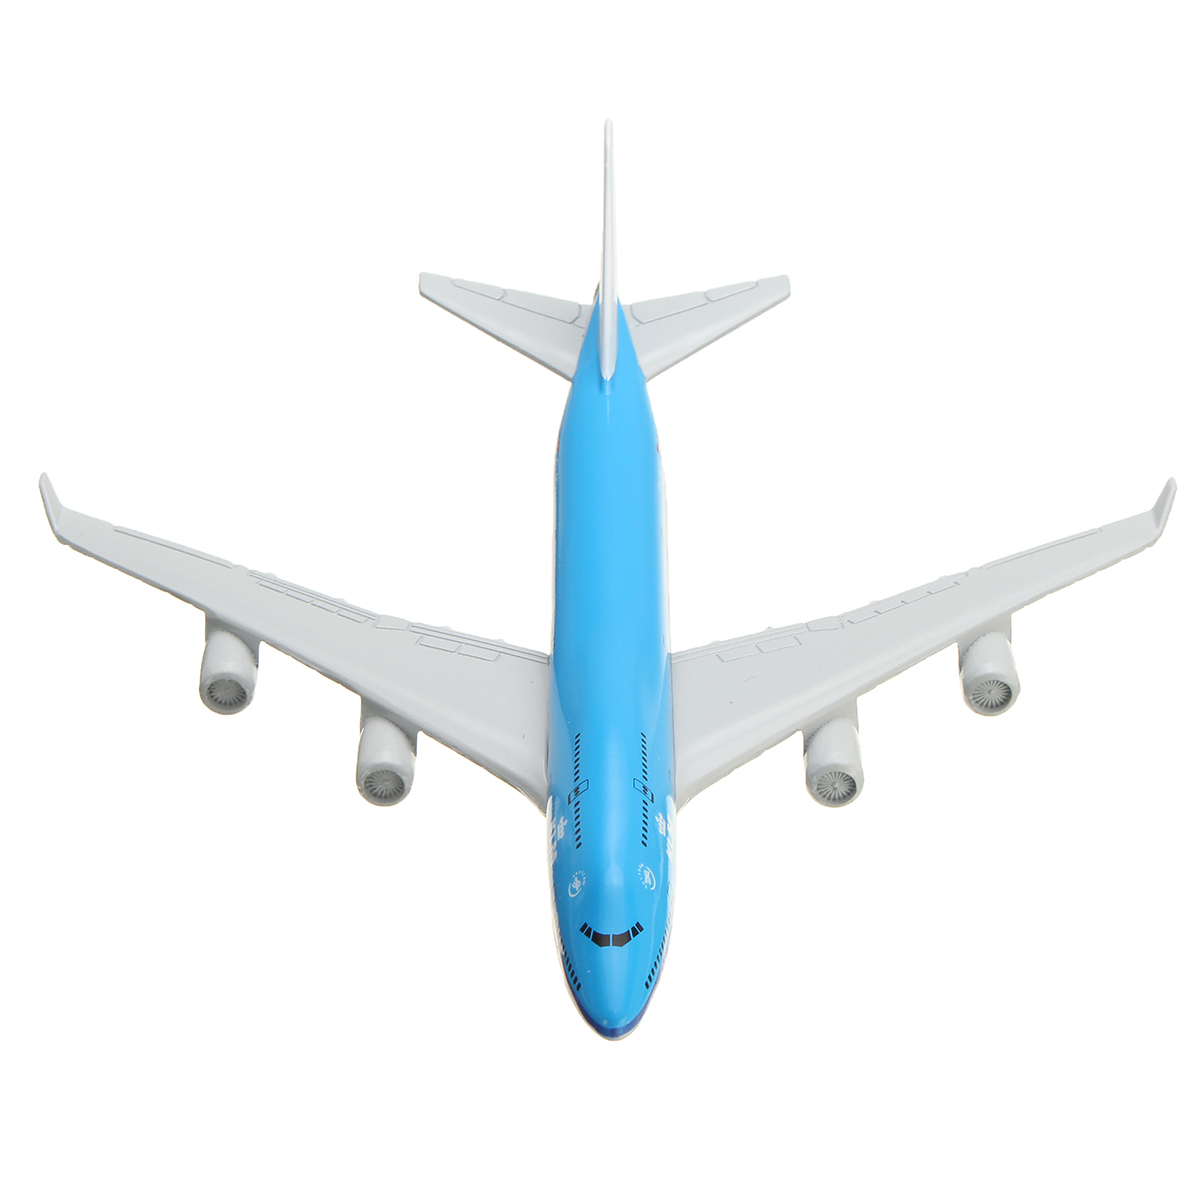 NEW-16cm-Airplane-Metal-Plane-Model-Aircraft-B747-KLM-Aeroplane-Scale-Airplane-Desk-Toy-1102722-6